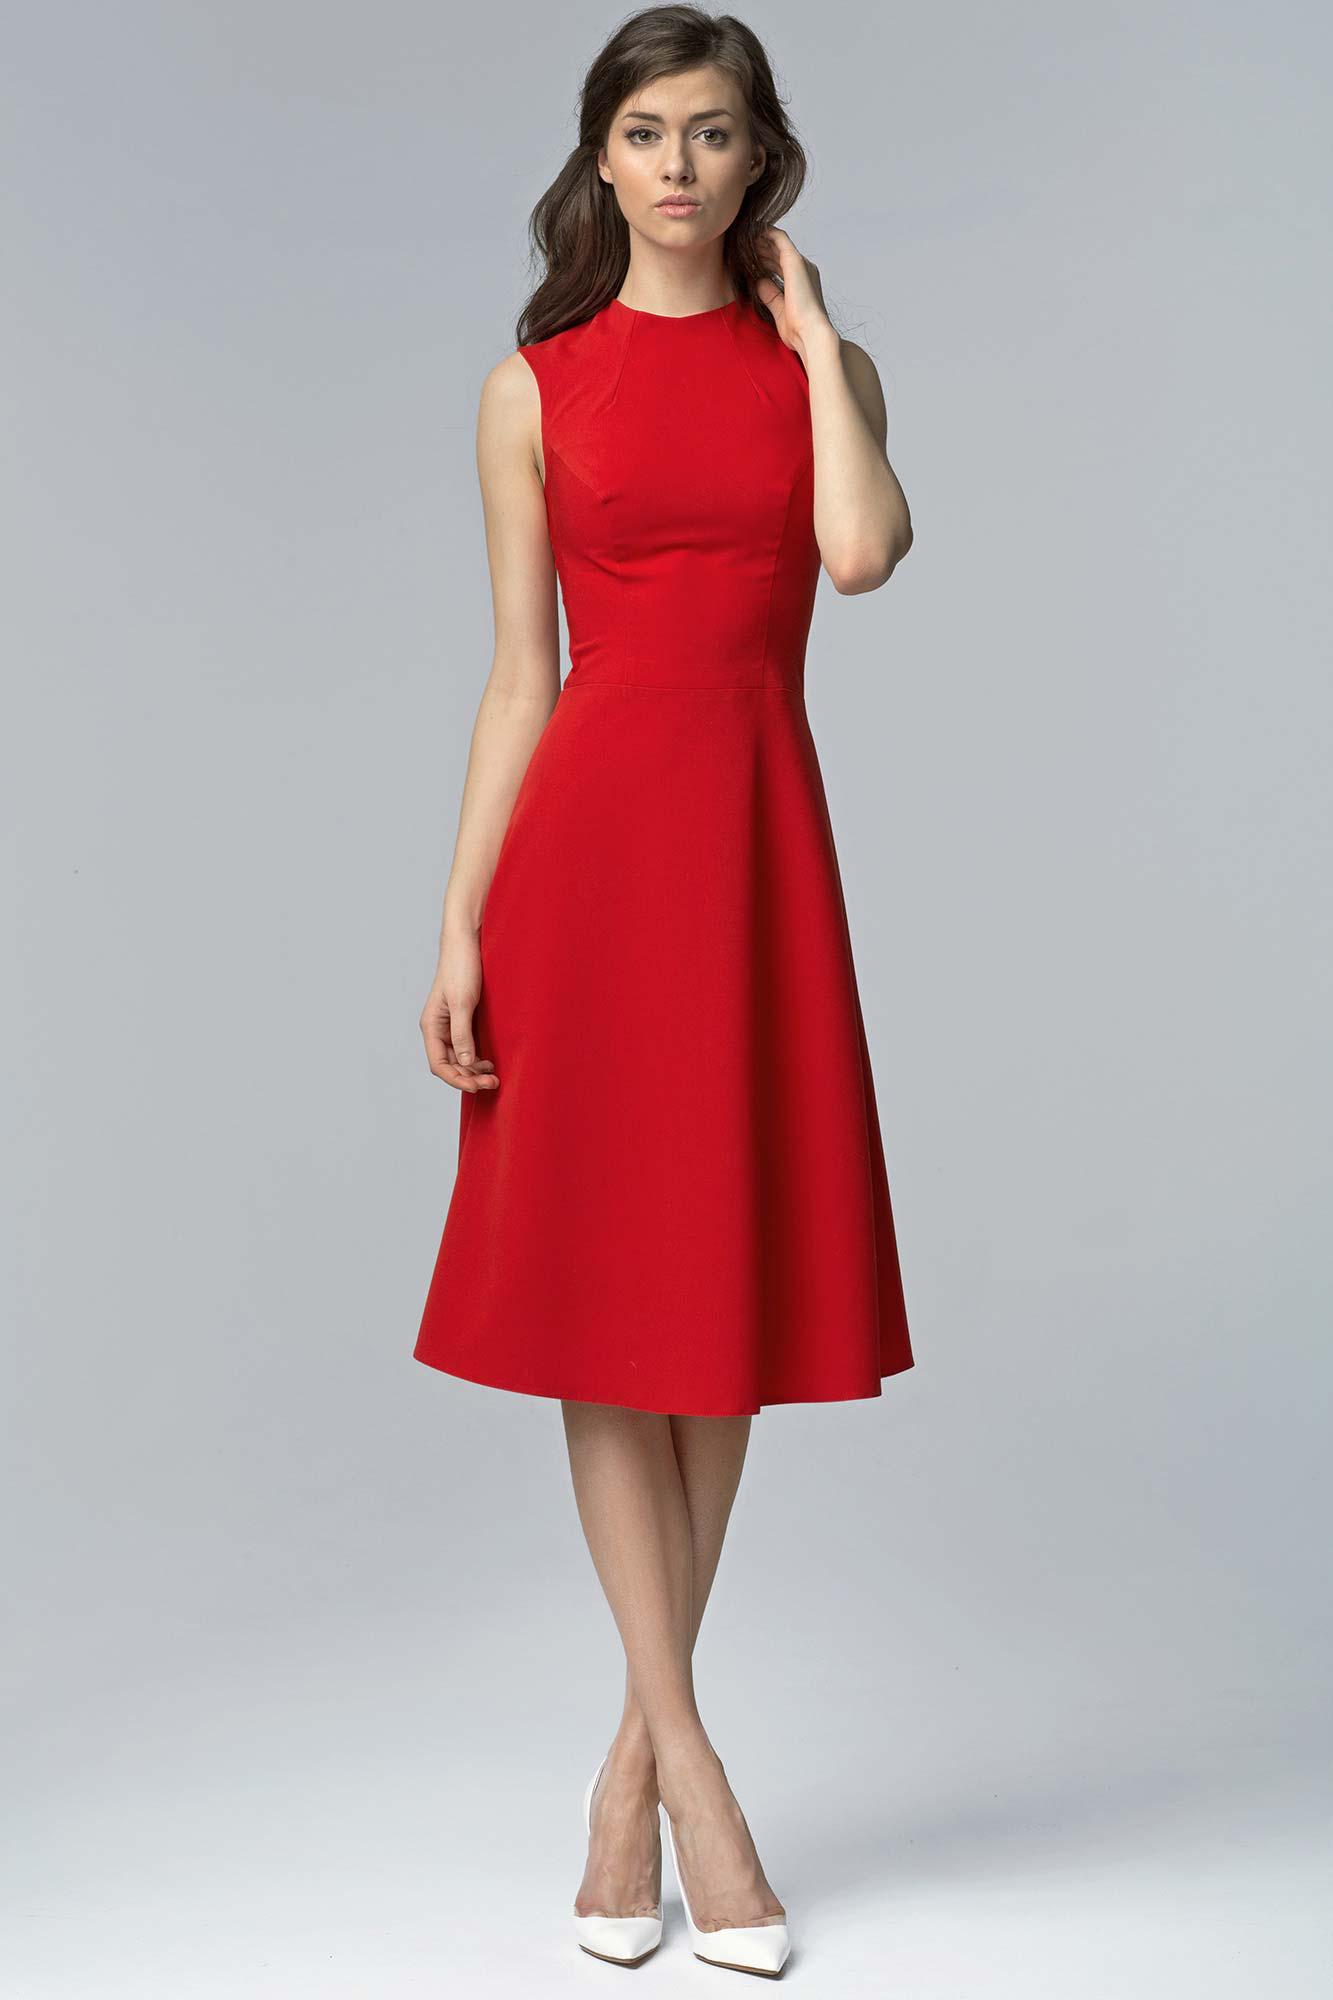 Robe rouge elegante